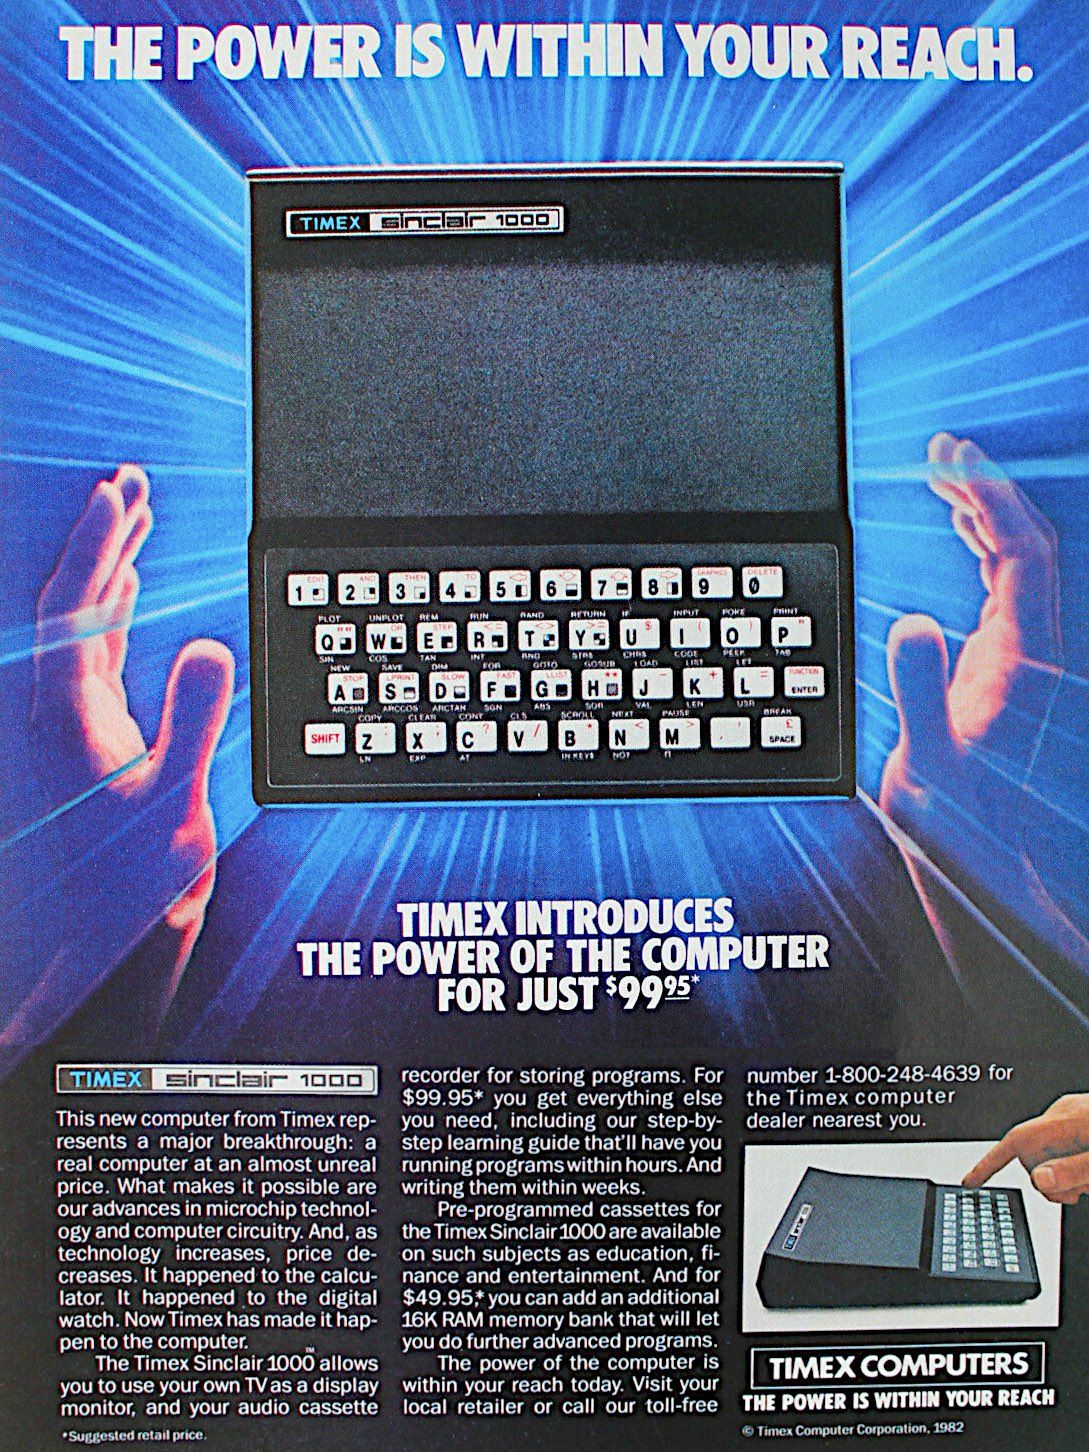 Sinclair1000thepowerwithinyourreach.jpg